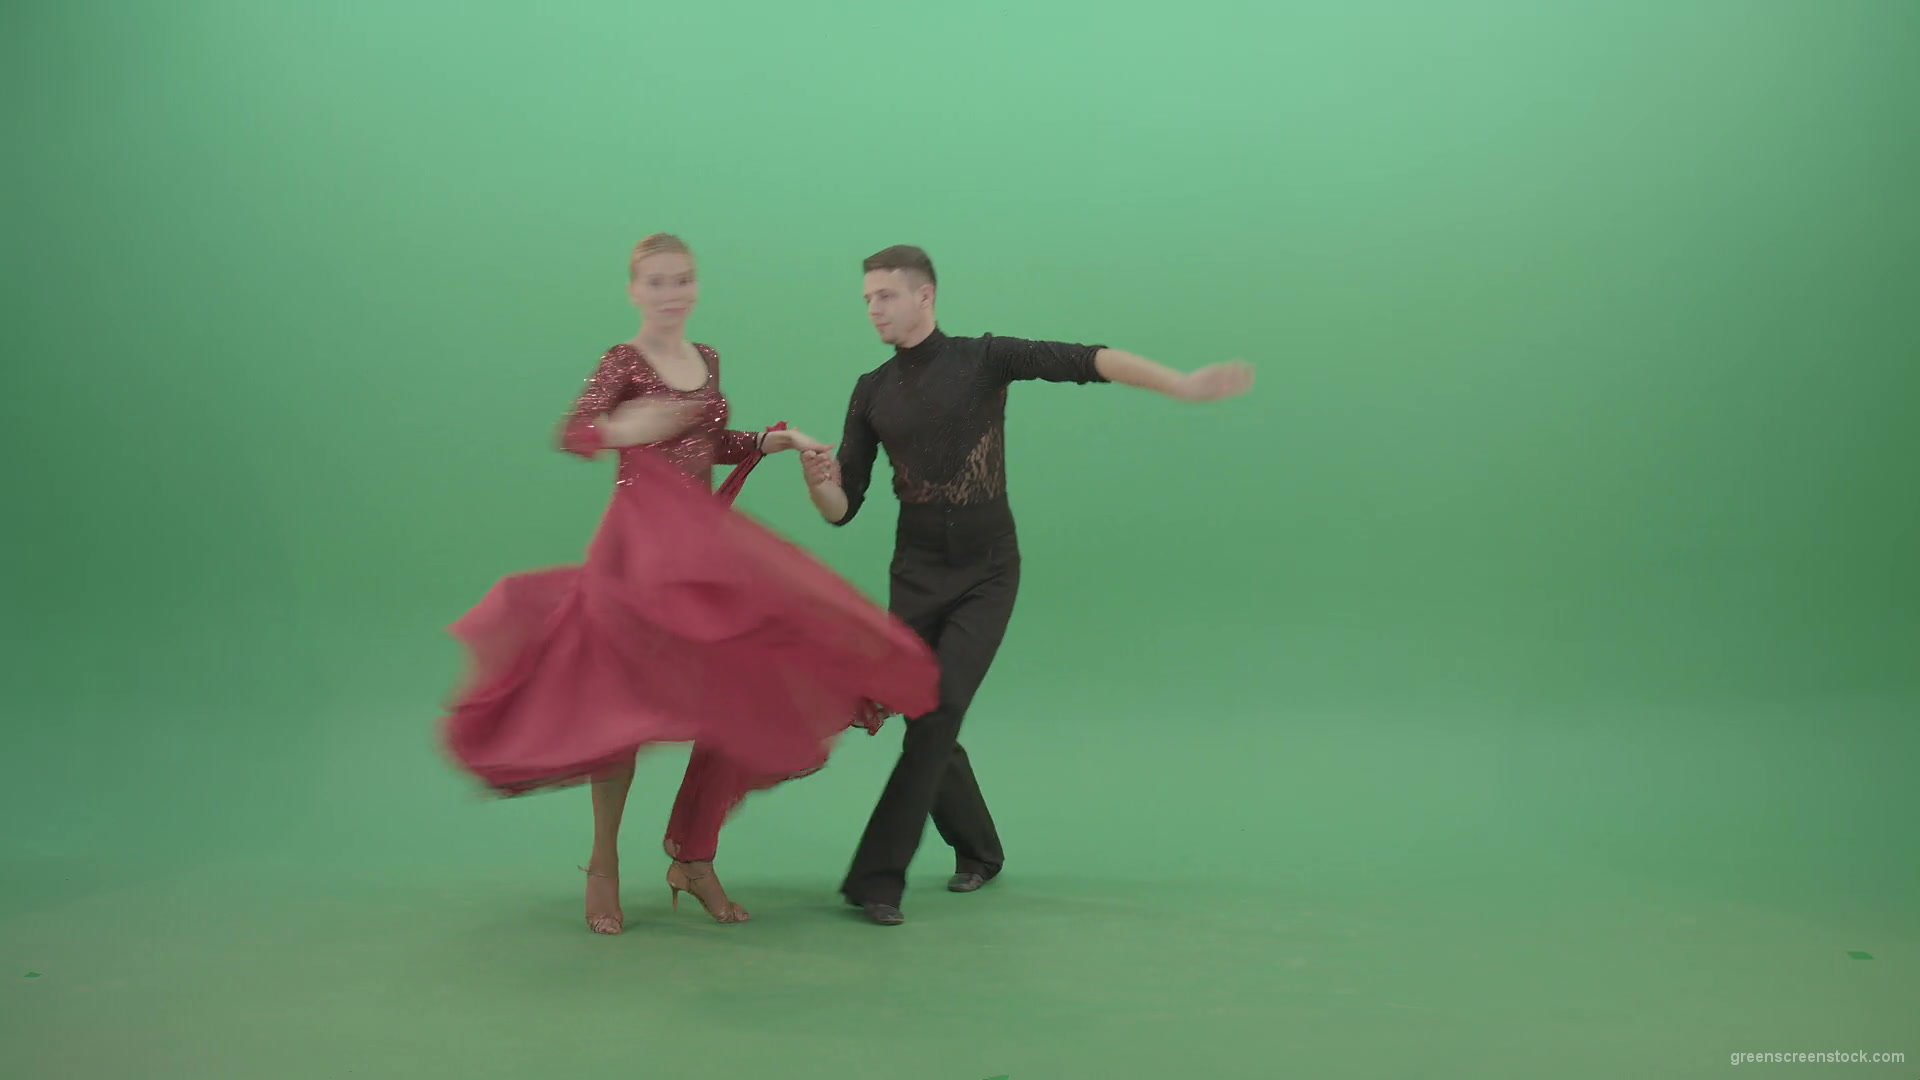 Beautiful-Pair-dancing-ballroom-dance-with-grand-opening-on-green-screen-4K-Video-Footage-1920_004 Green Screen Stock